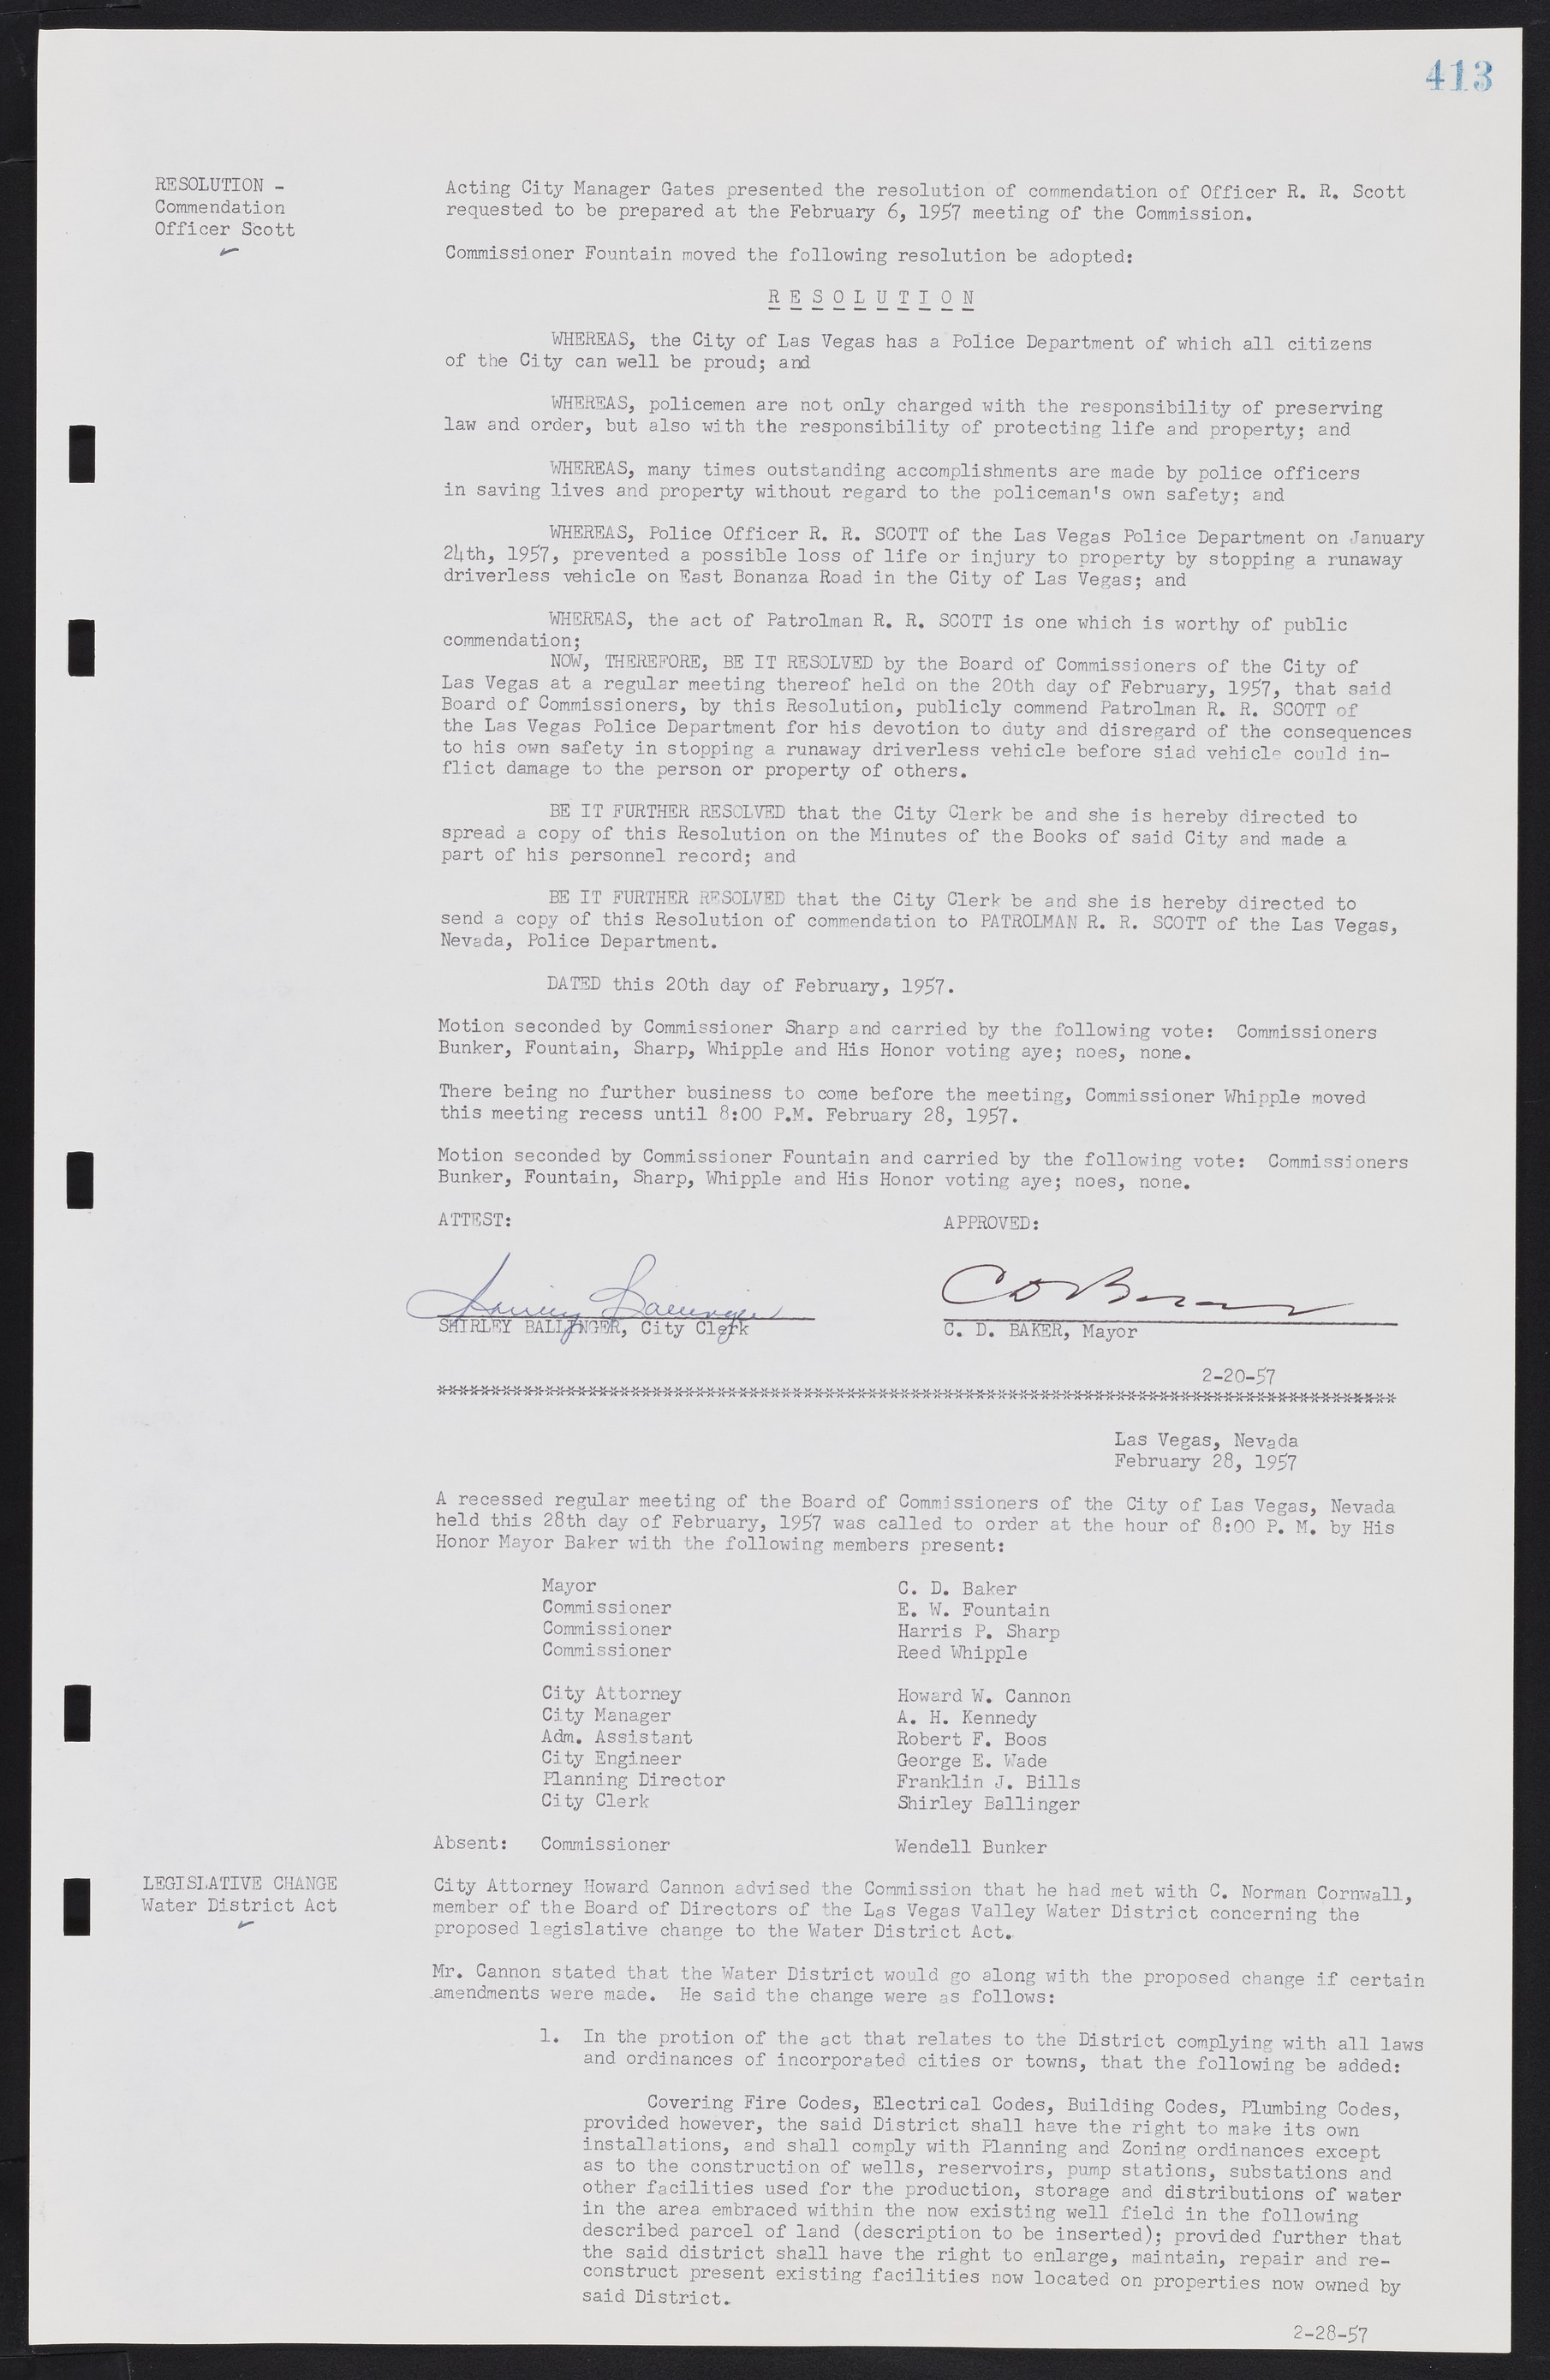 Las Vegas City Commission Minutes, September 21, 1955 to November 20, 1957, lvc000010-433